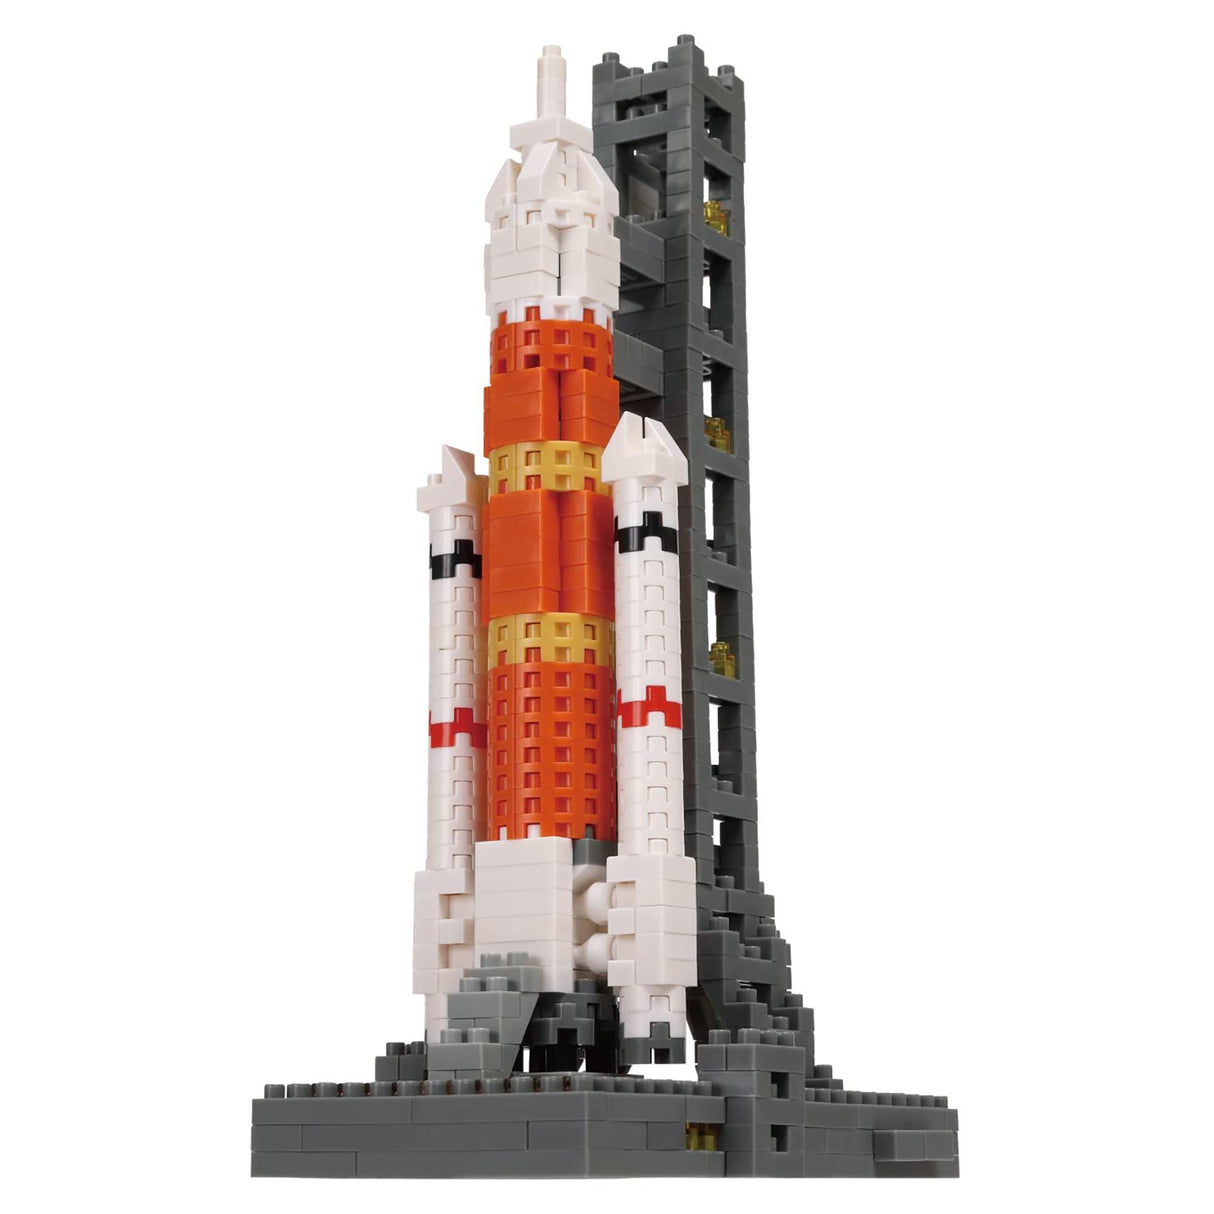 nanoblock Rocket & Launch Pad (610 pieces)